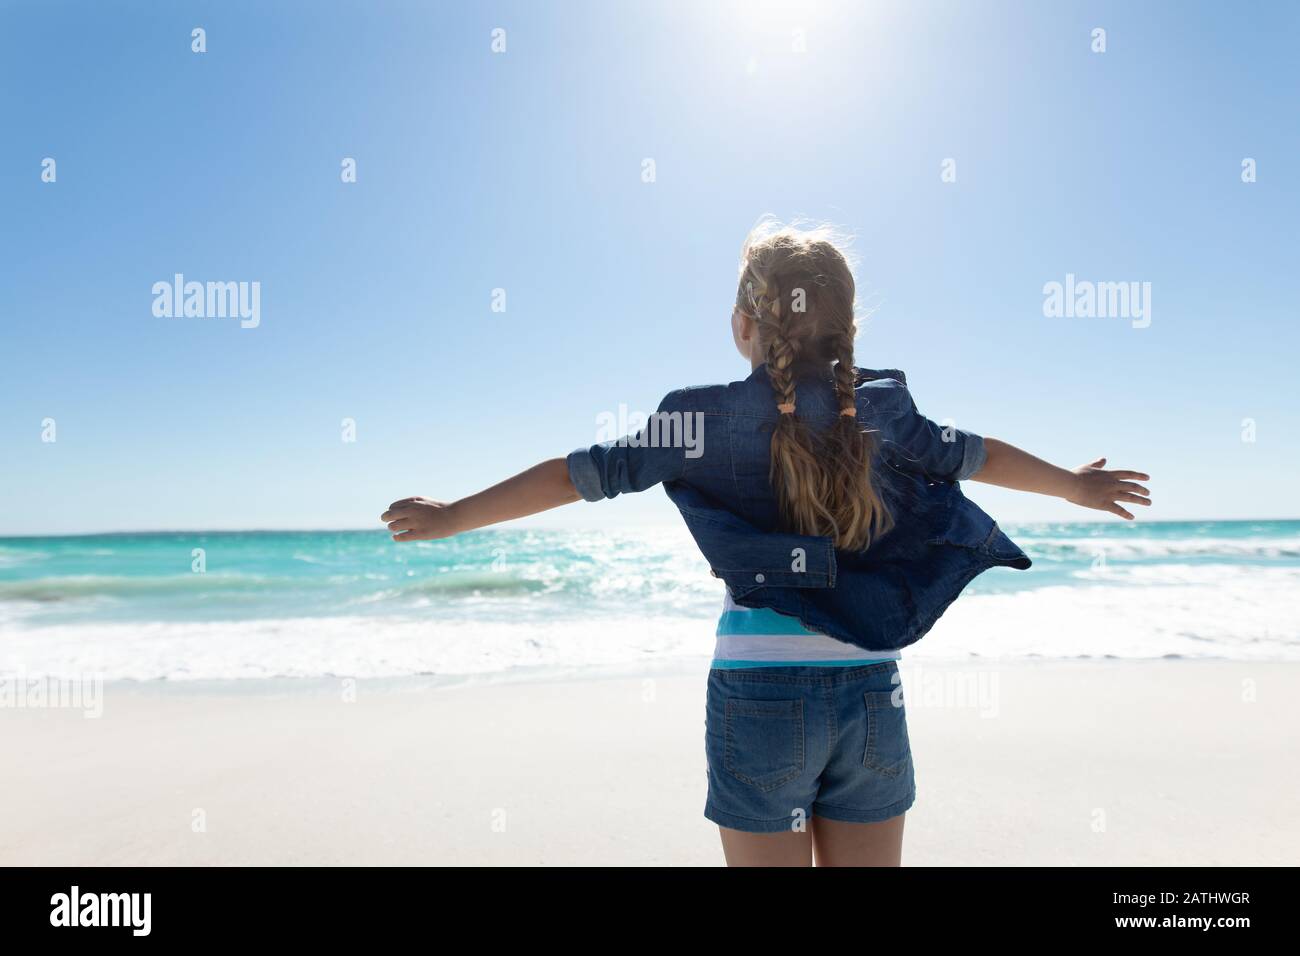 Girl enjoying free time at the beach Stock Photo